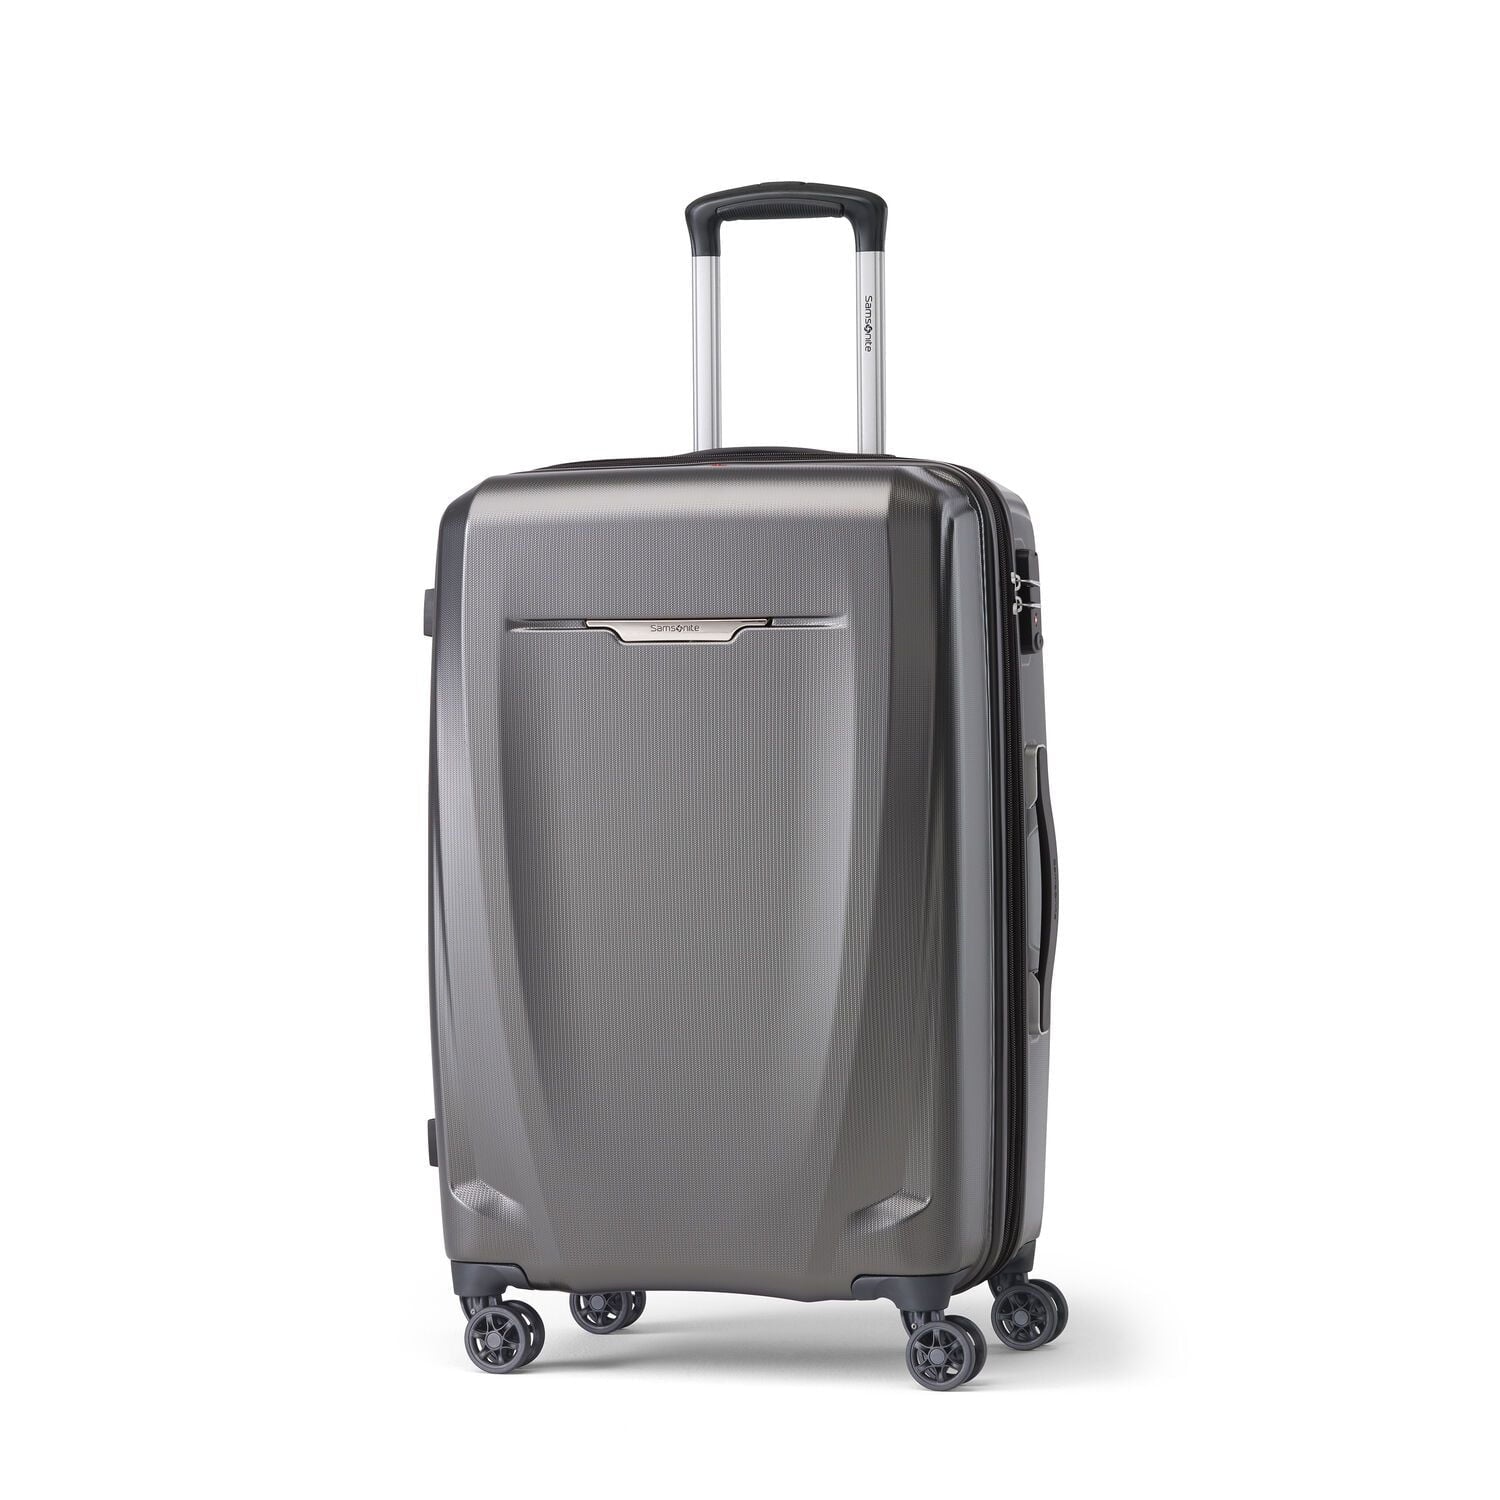 Samsonite Pursuit DLX Plus Spinner Medium Expandable Luggage - Charcoal